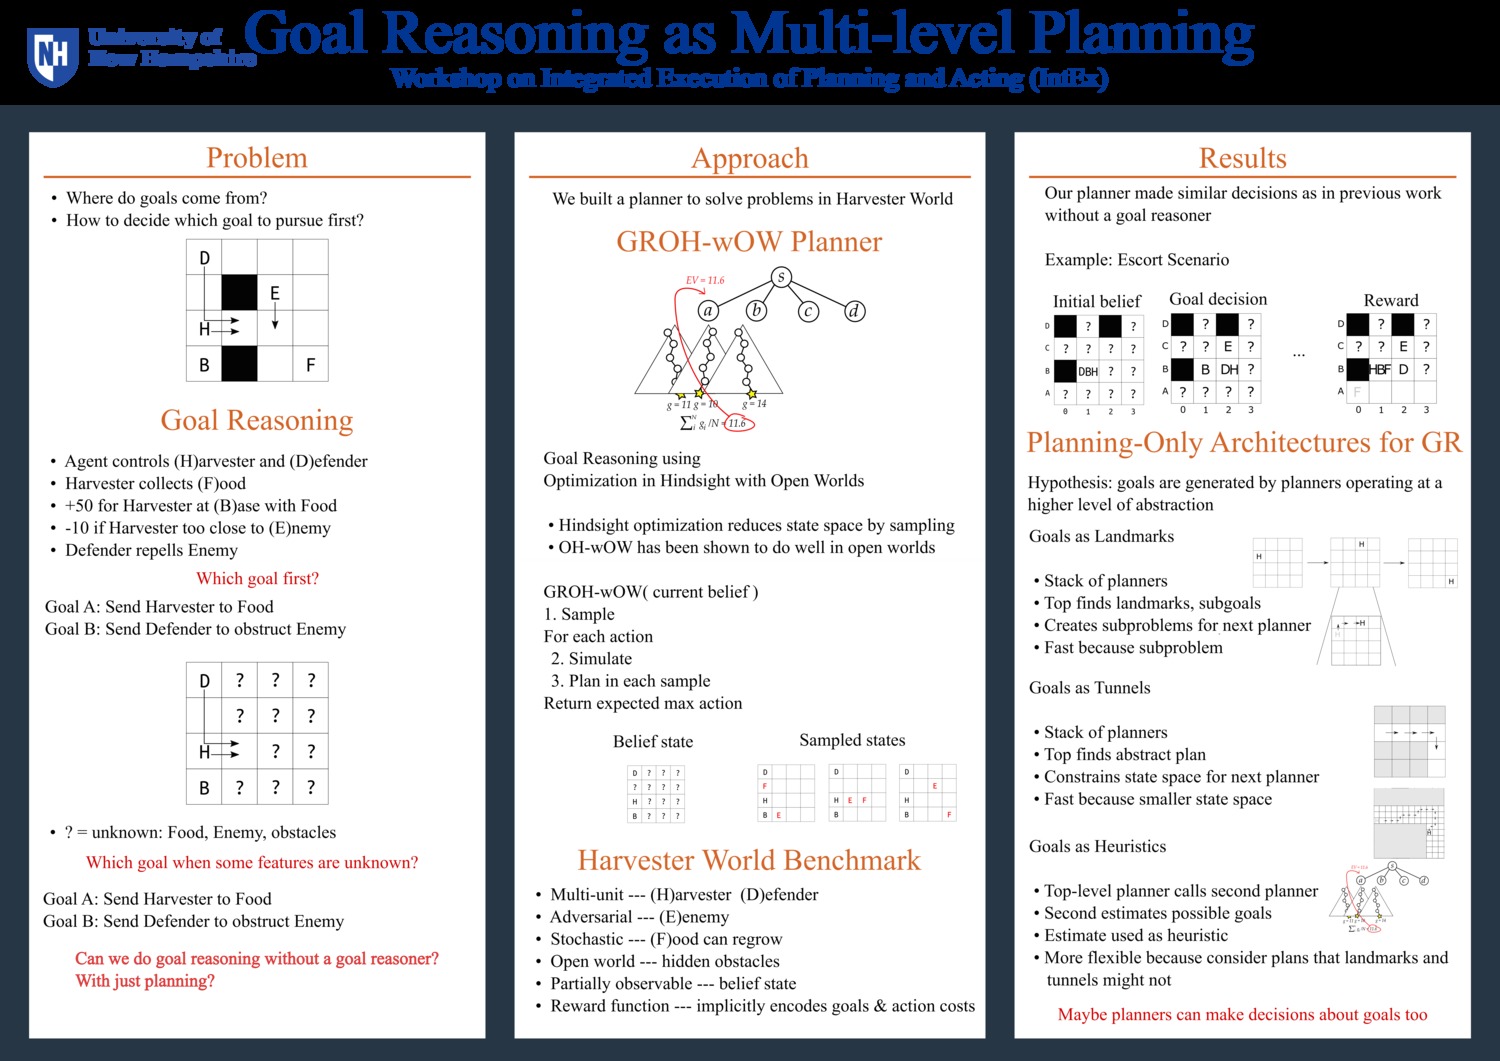 Goal Reasoning As Multi-Level Planning by ruml